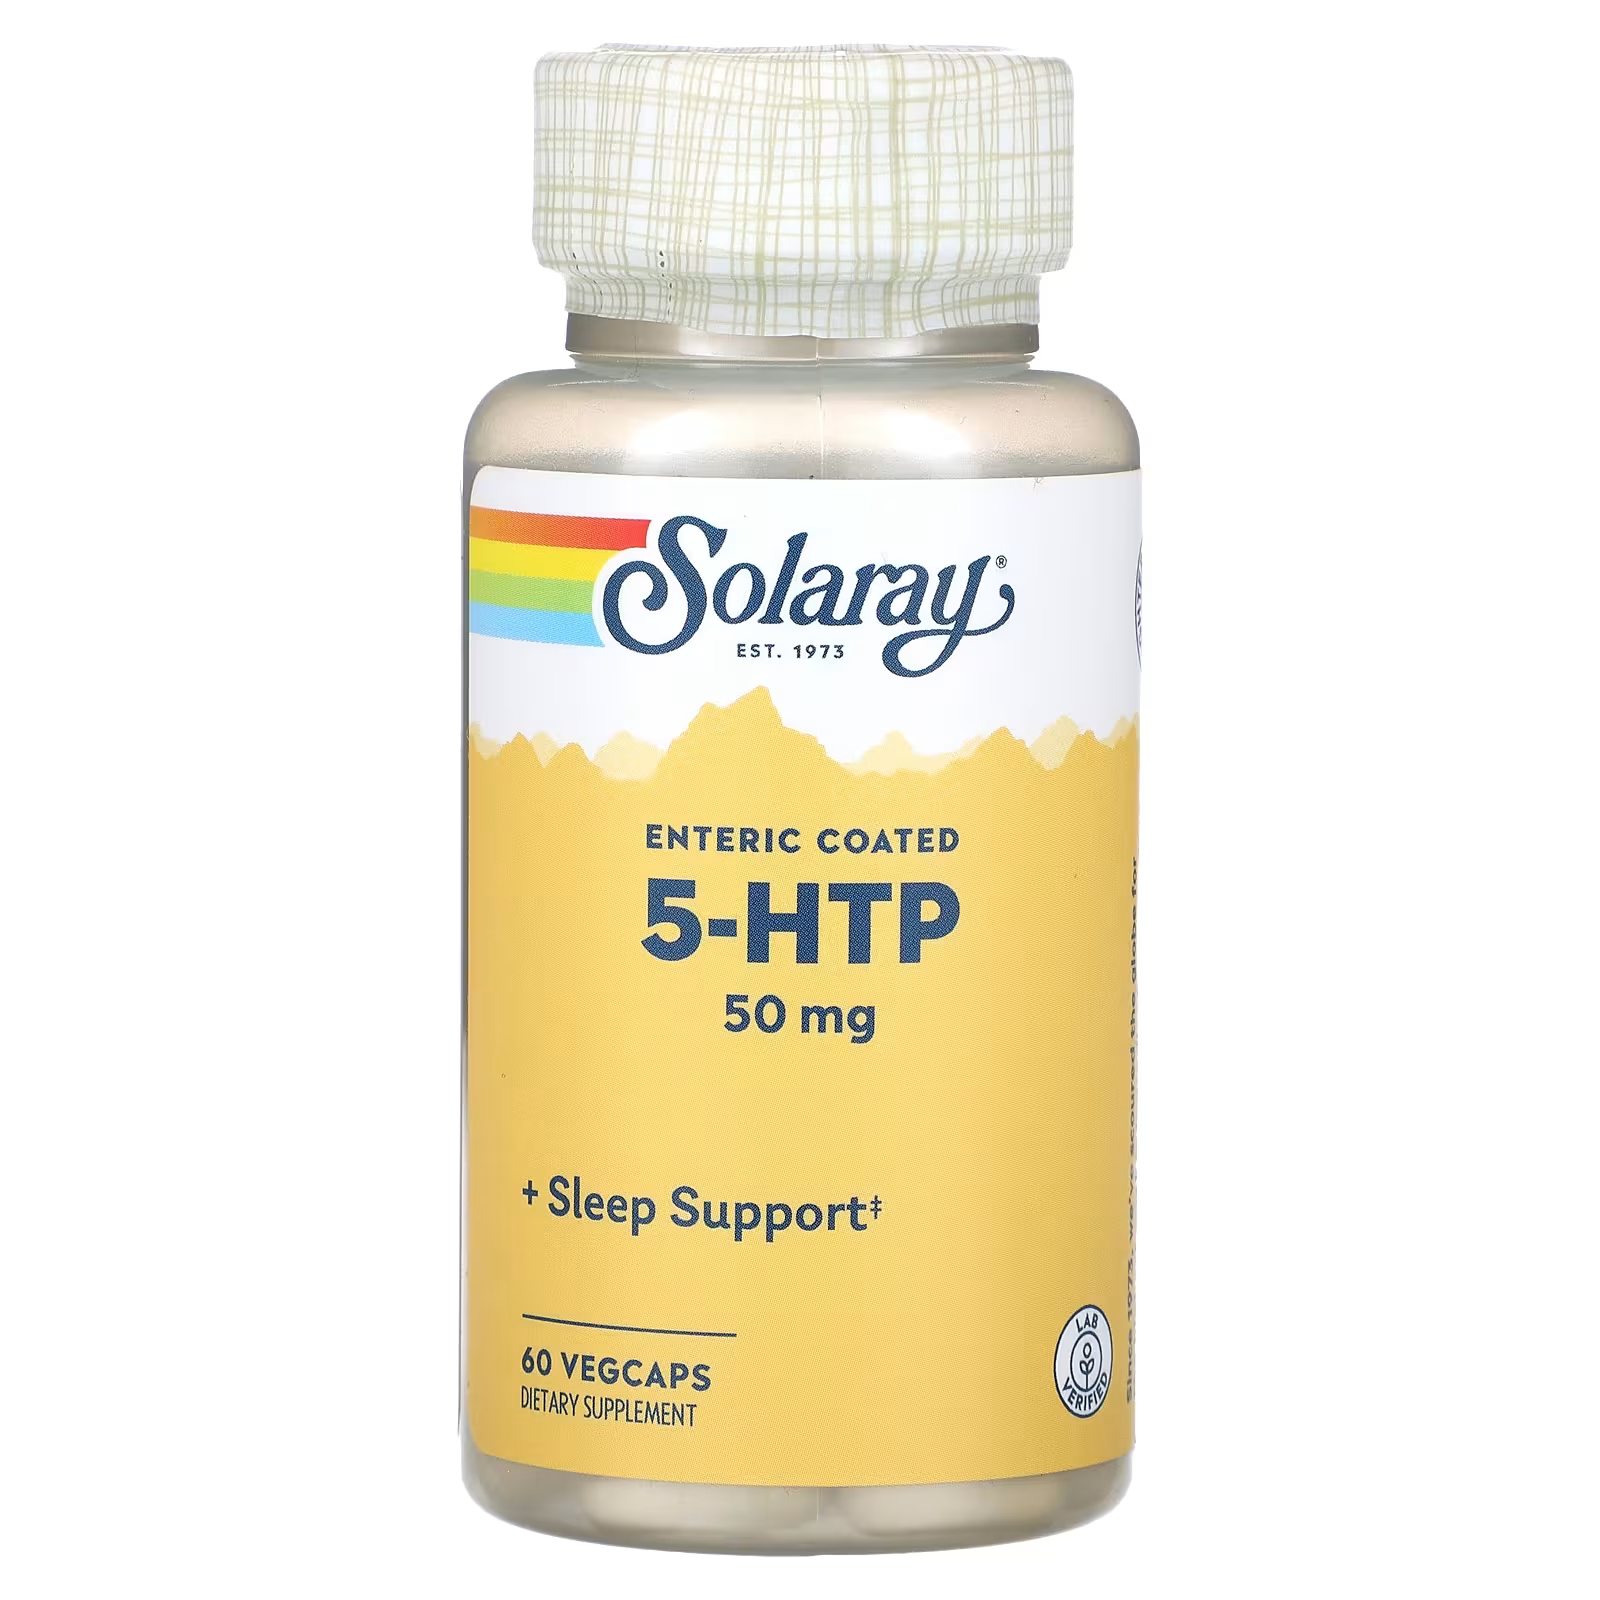 Пищевая добавка Solaray 5-HTP 50 мг, 60 капсул пищевая добавка swanson 5 htp extra strength 100 мг 60 капсул